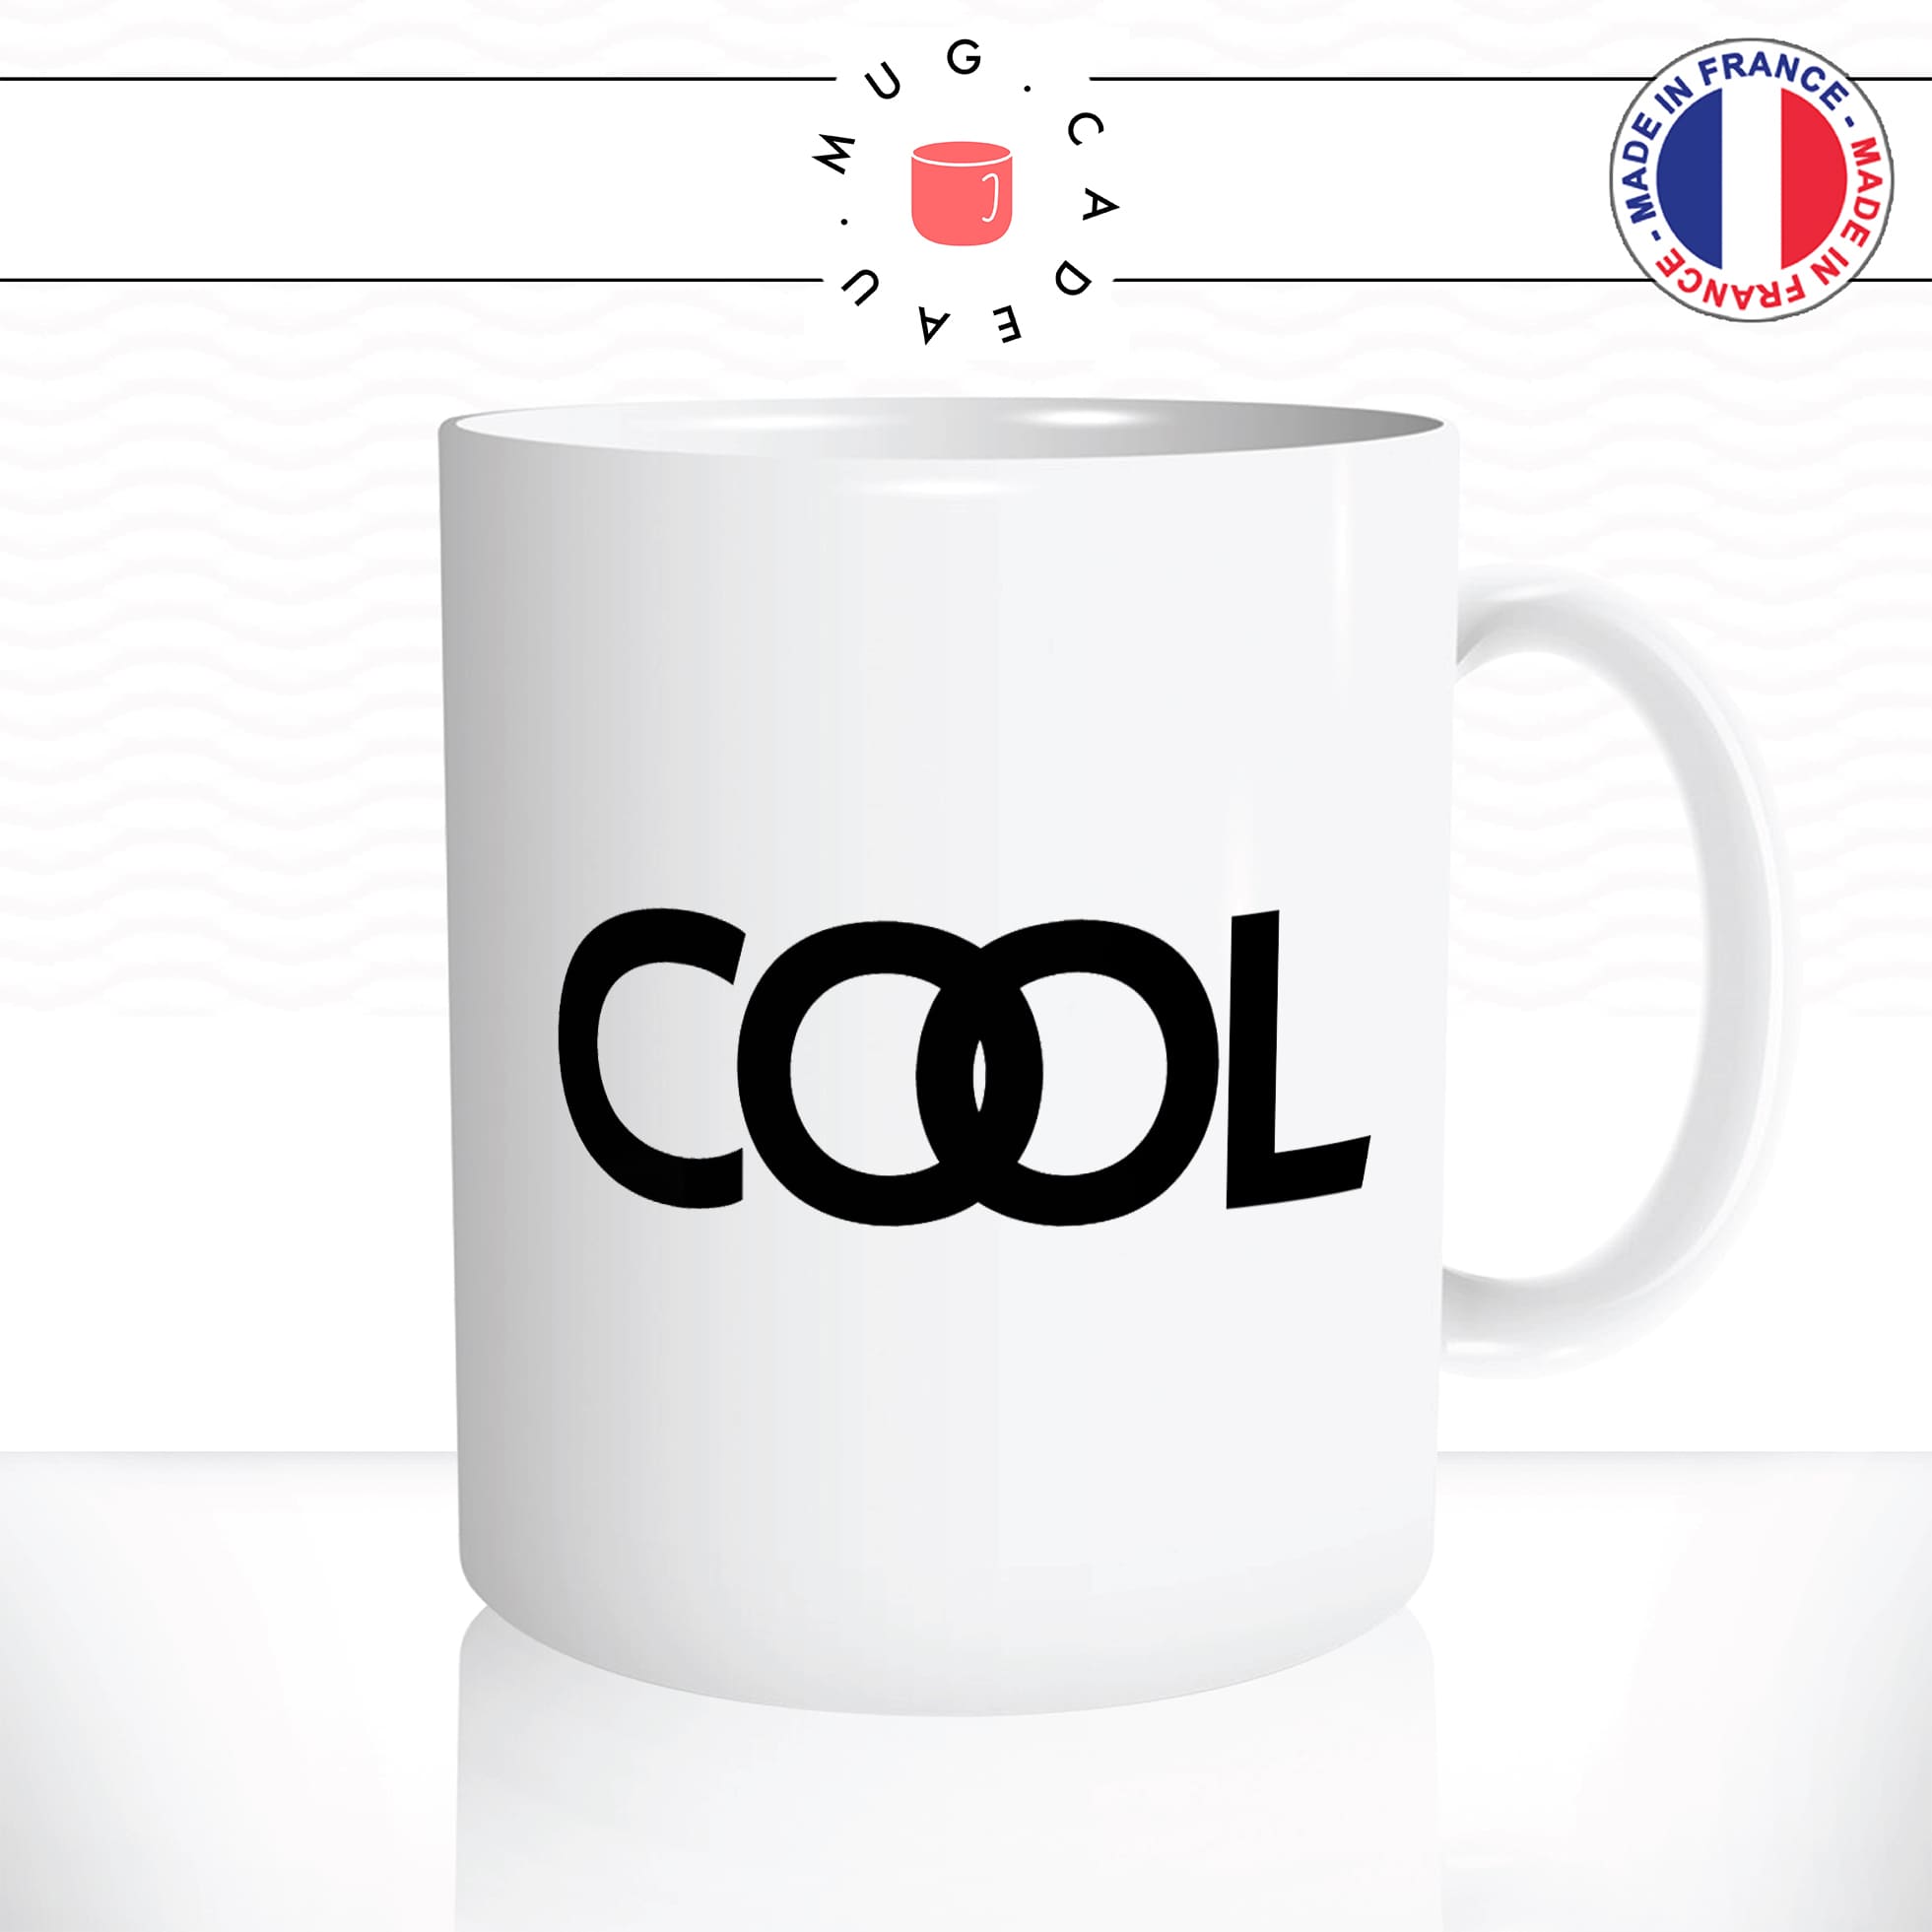 mug-tasse-blanc-cool-mot-anglais-expression-jeune-homme-mec-ado-humour-fun-idée-cadeau-originale-coole-unique2